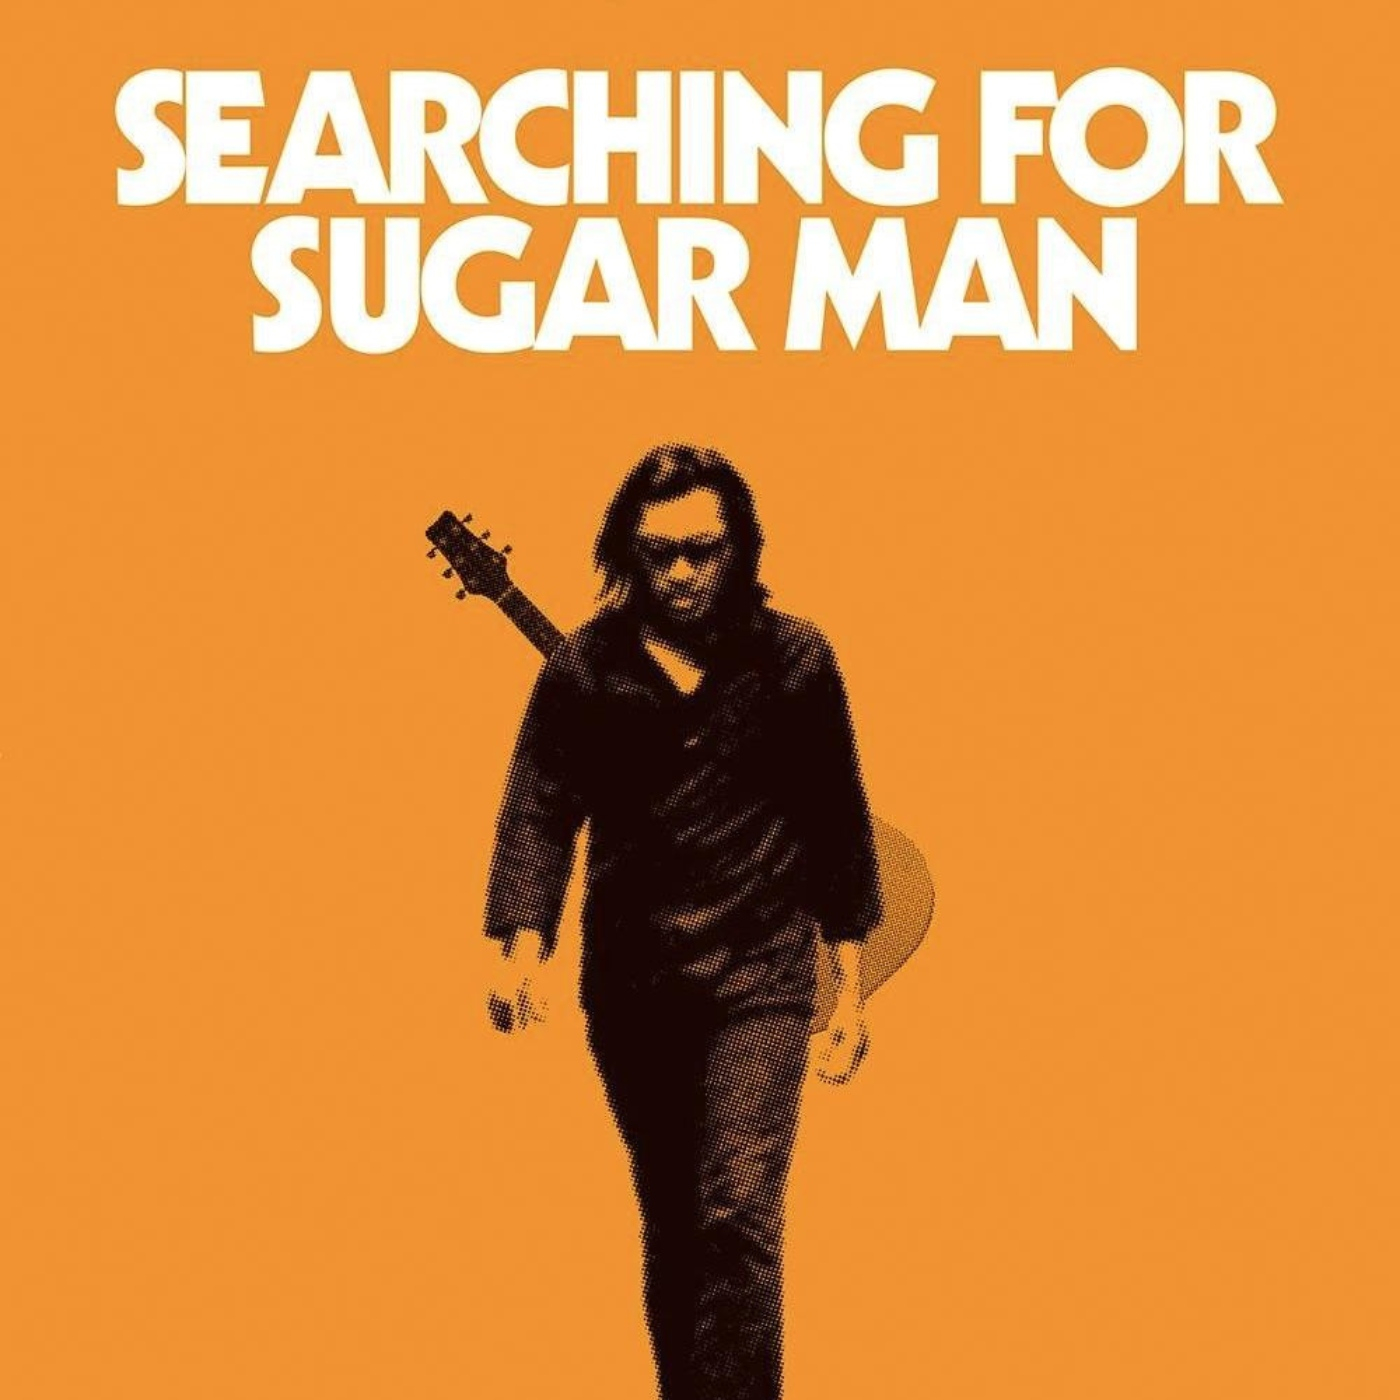 Los detectives musicólogos. Buscando a Rodriguez. Searching for sugar man.